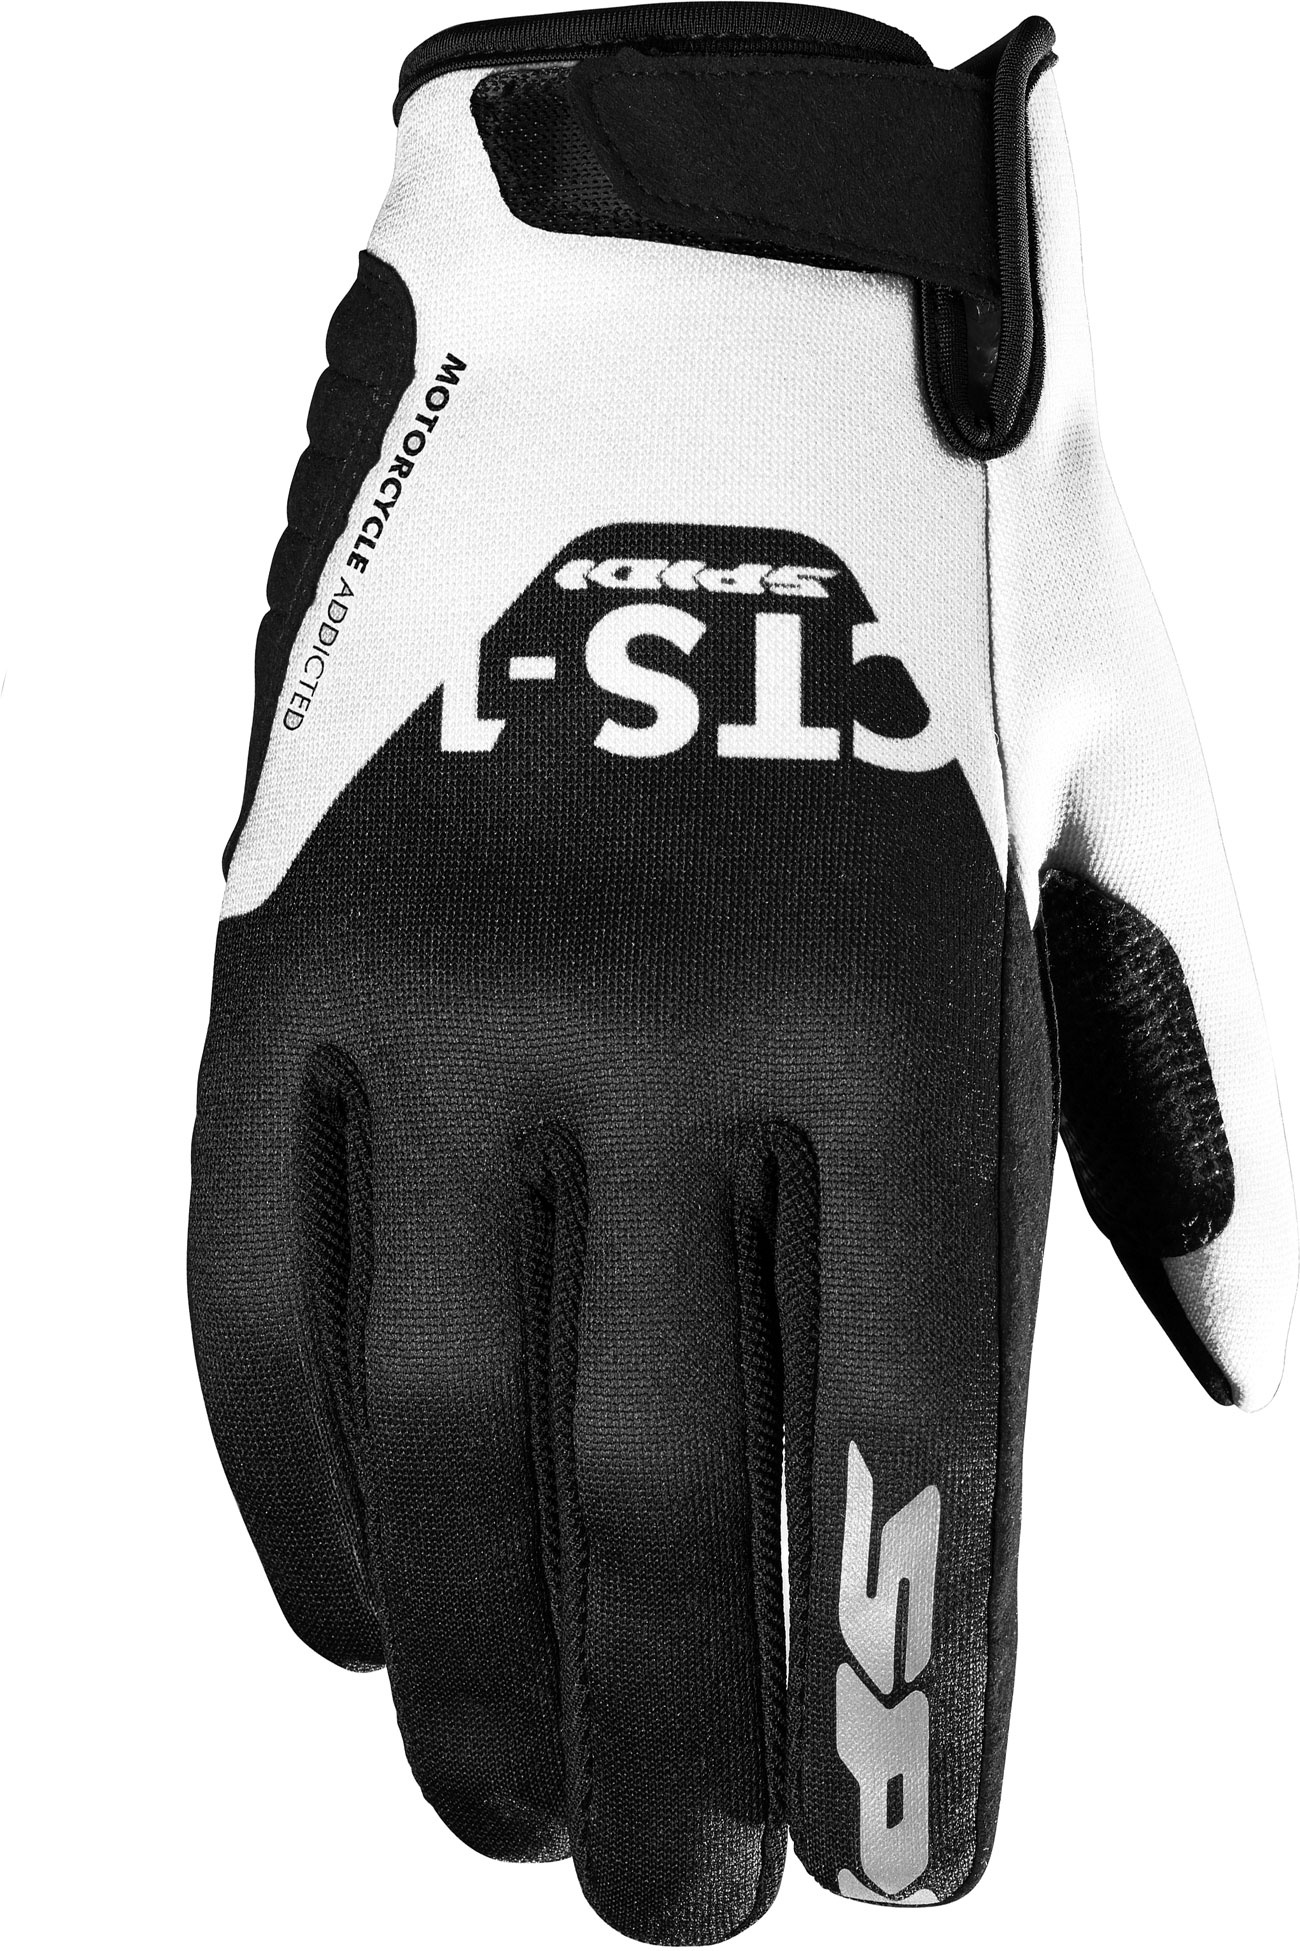 Spidi CTS-1, gants - Noir/Blanc - S